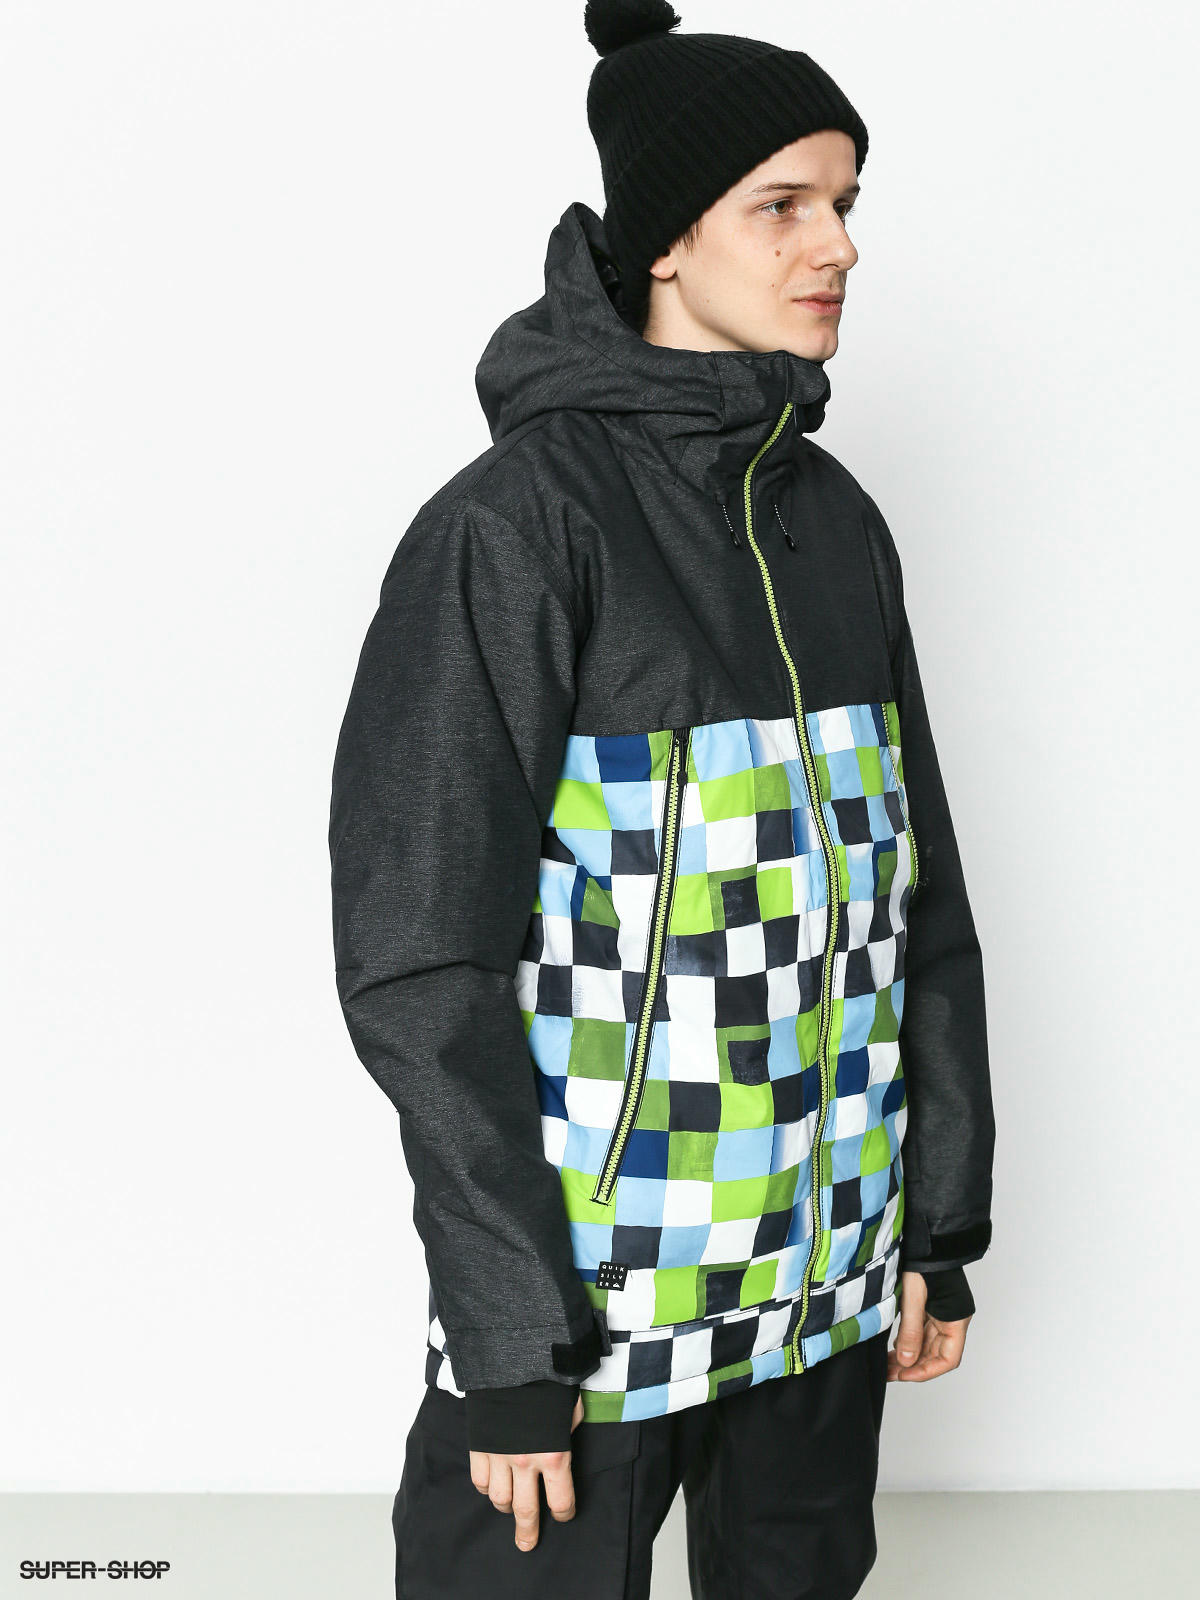 Mens Quiksilver Sierra Snowboard jacket (check atomic green)